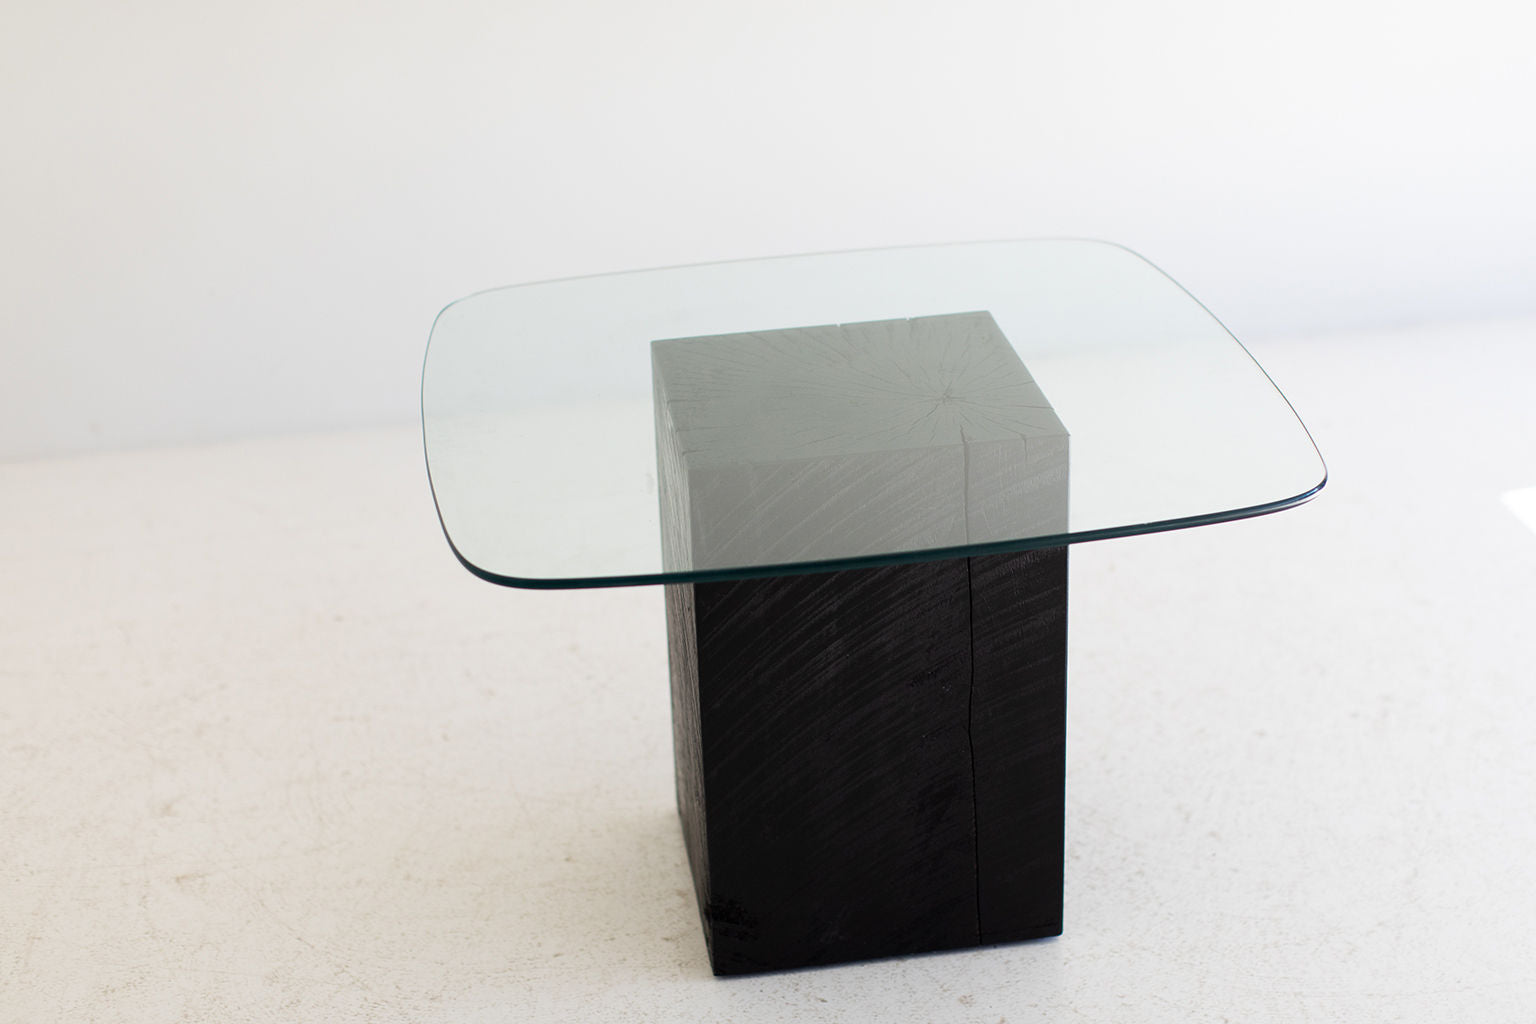 modern-glass-top-coffee-table-10